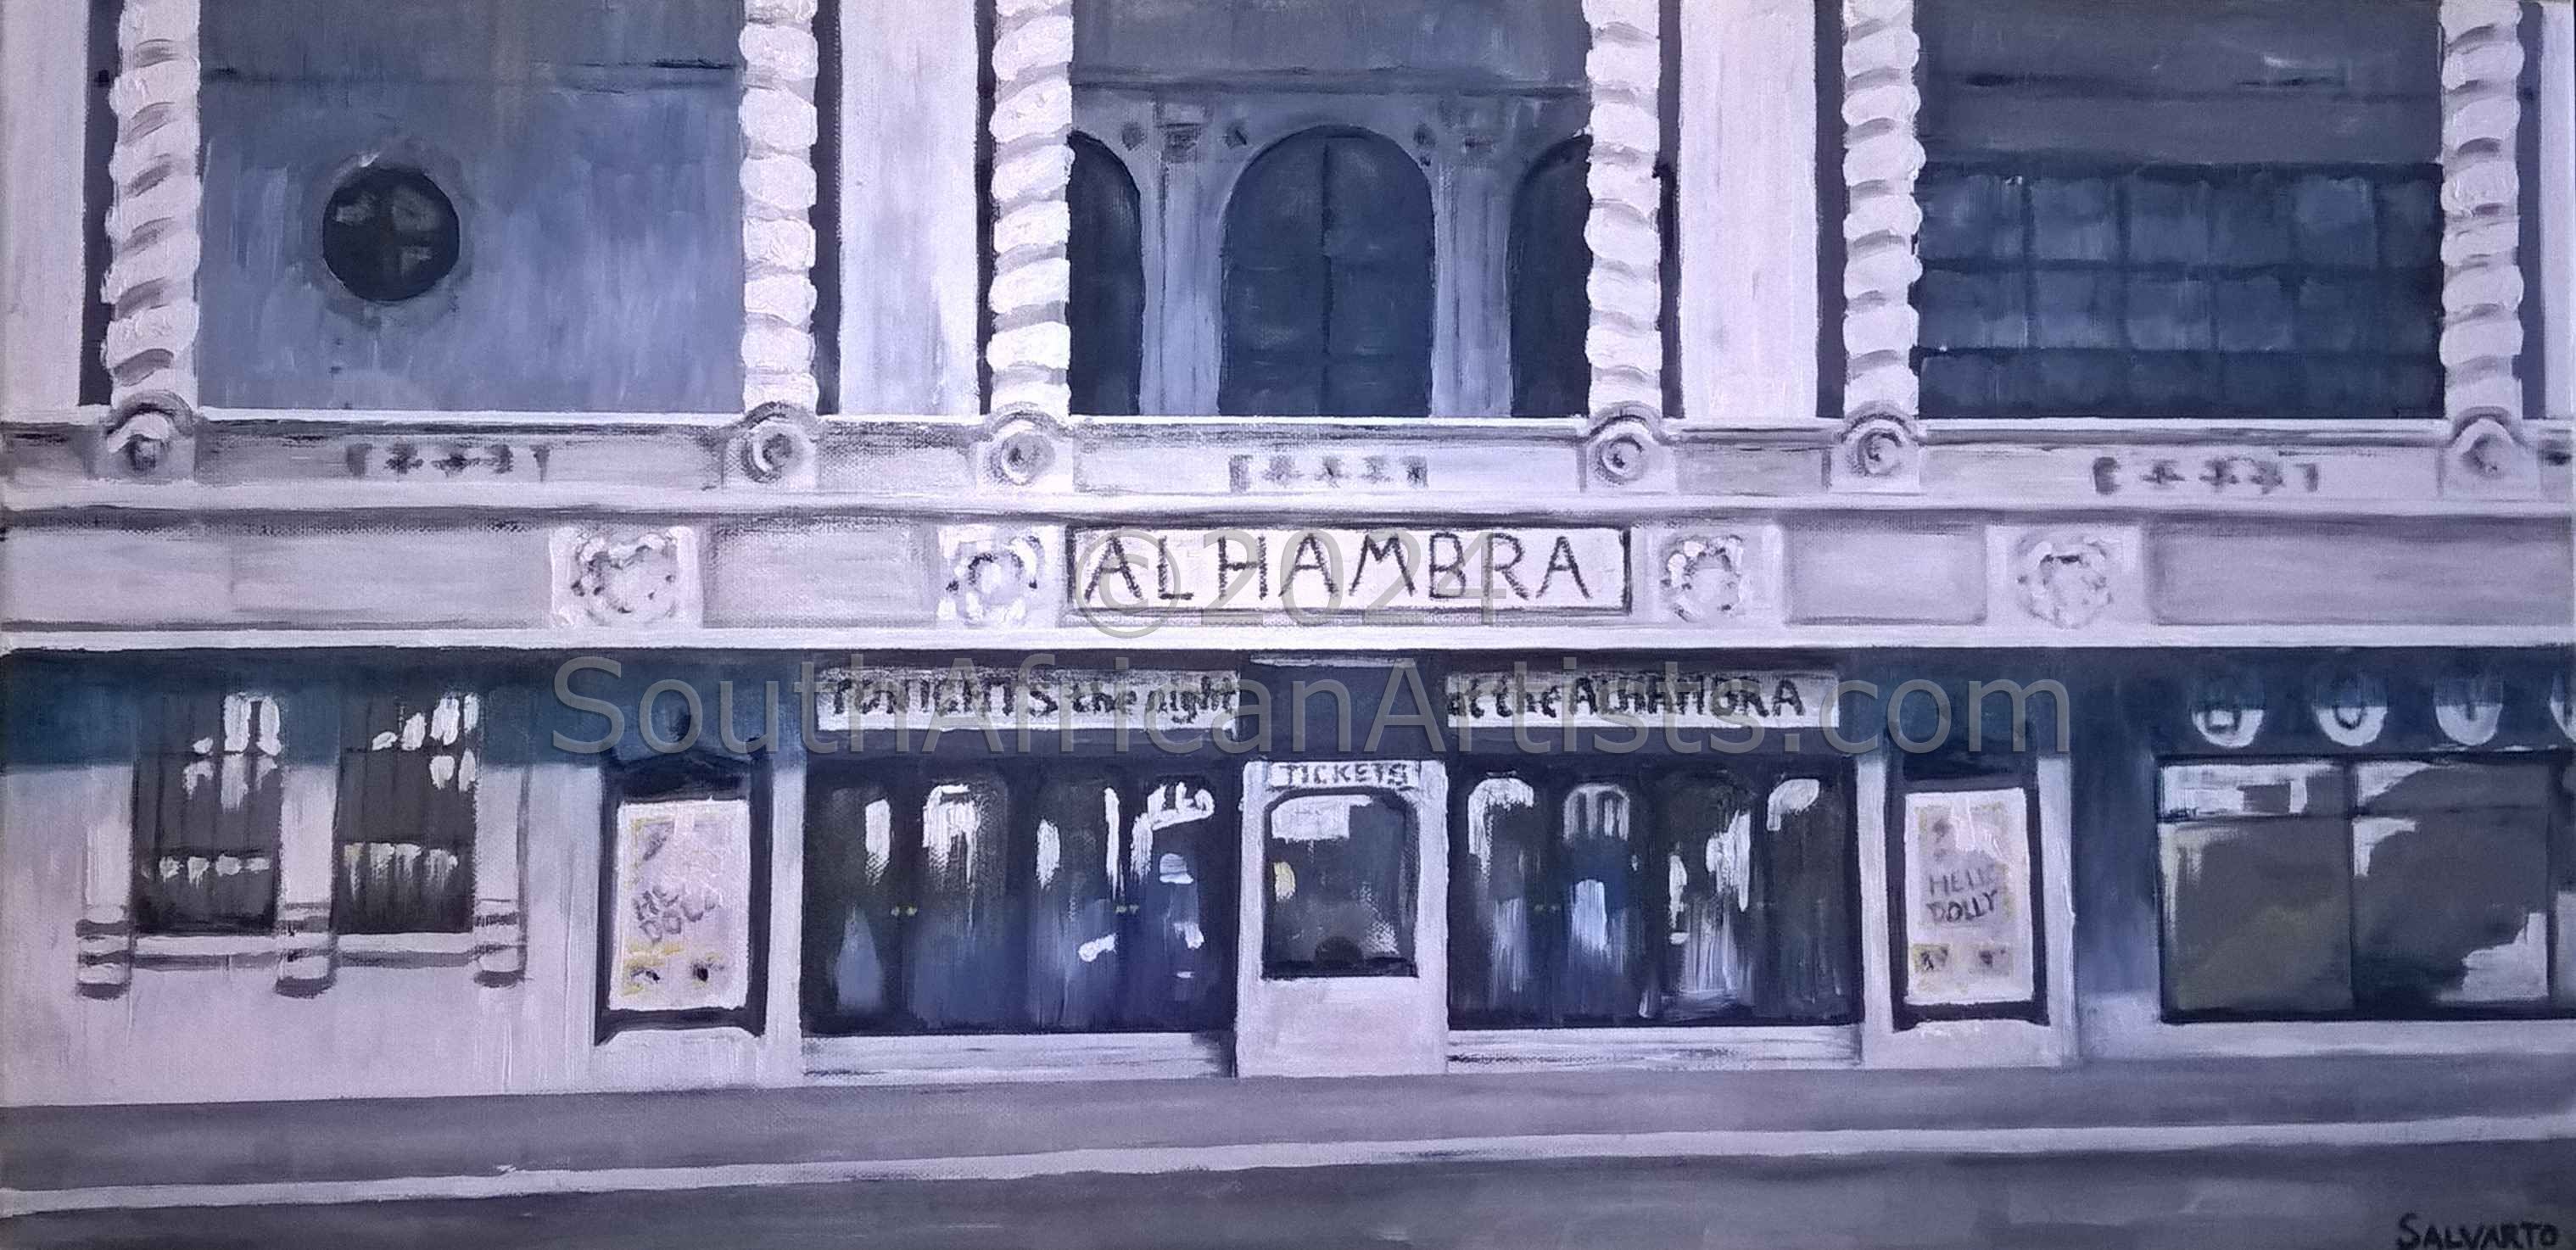 The Alhambra Theatre